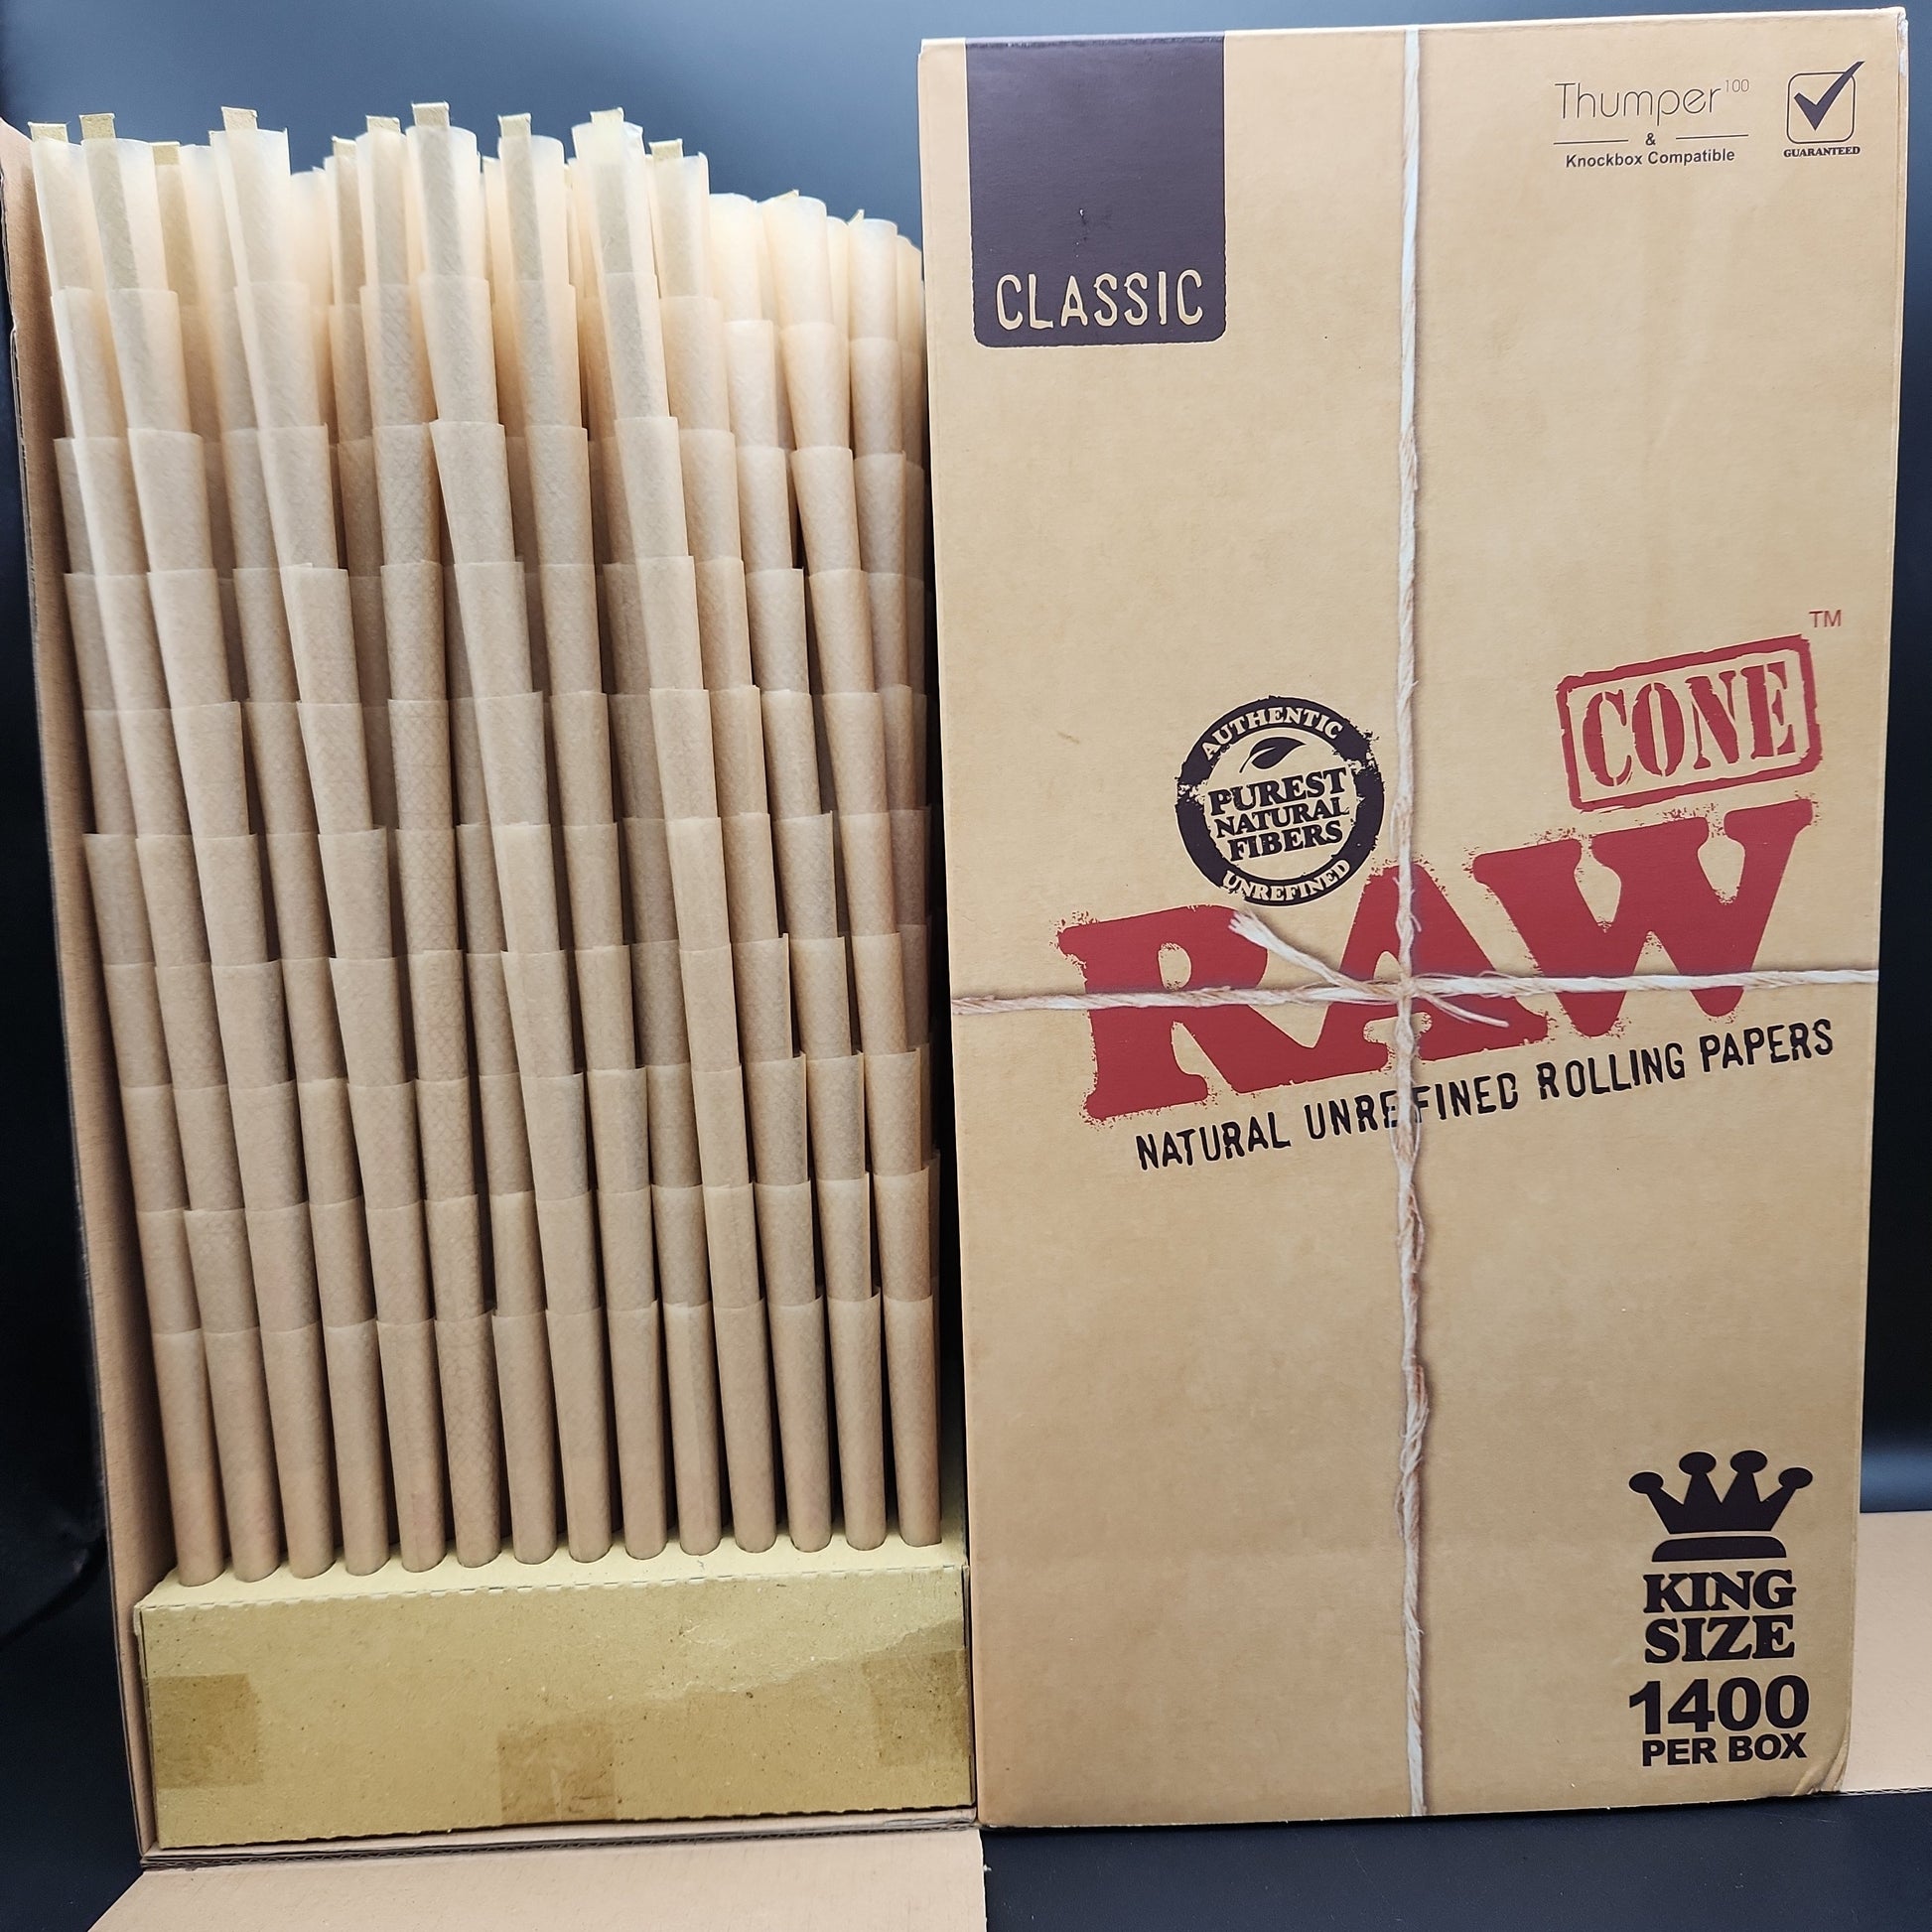 RAW Classic King Size Cones 1400 Box